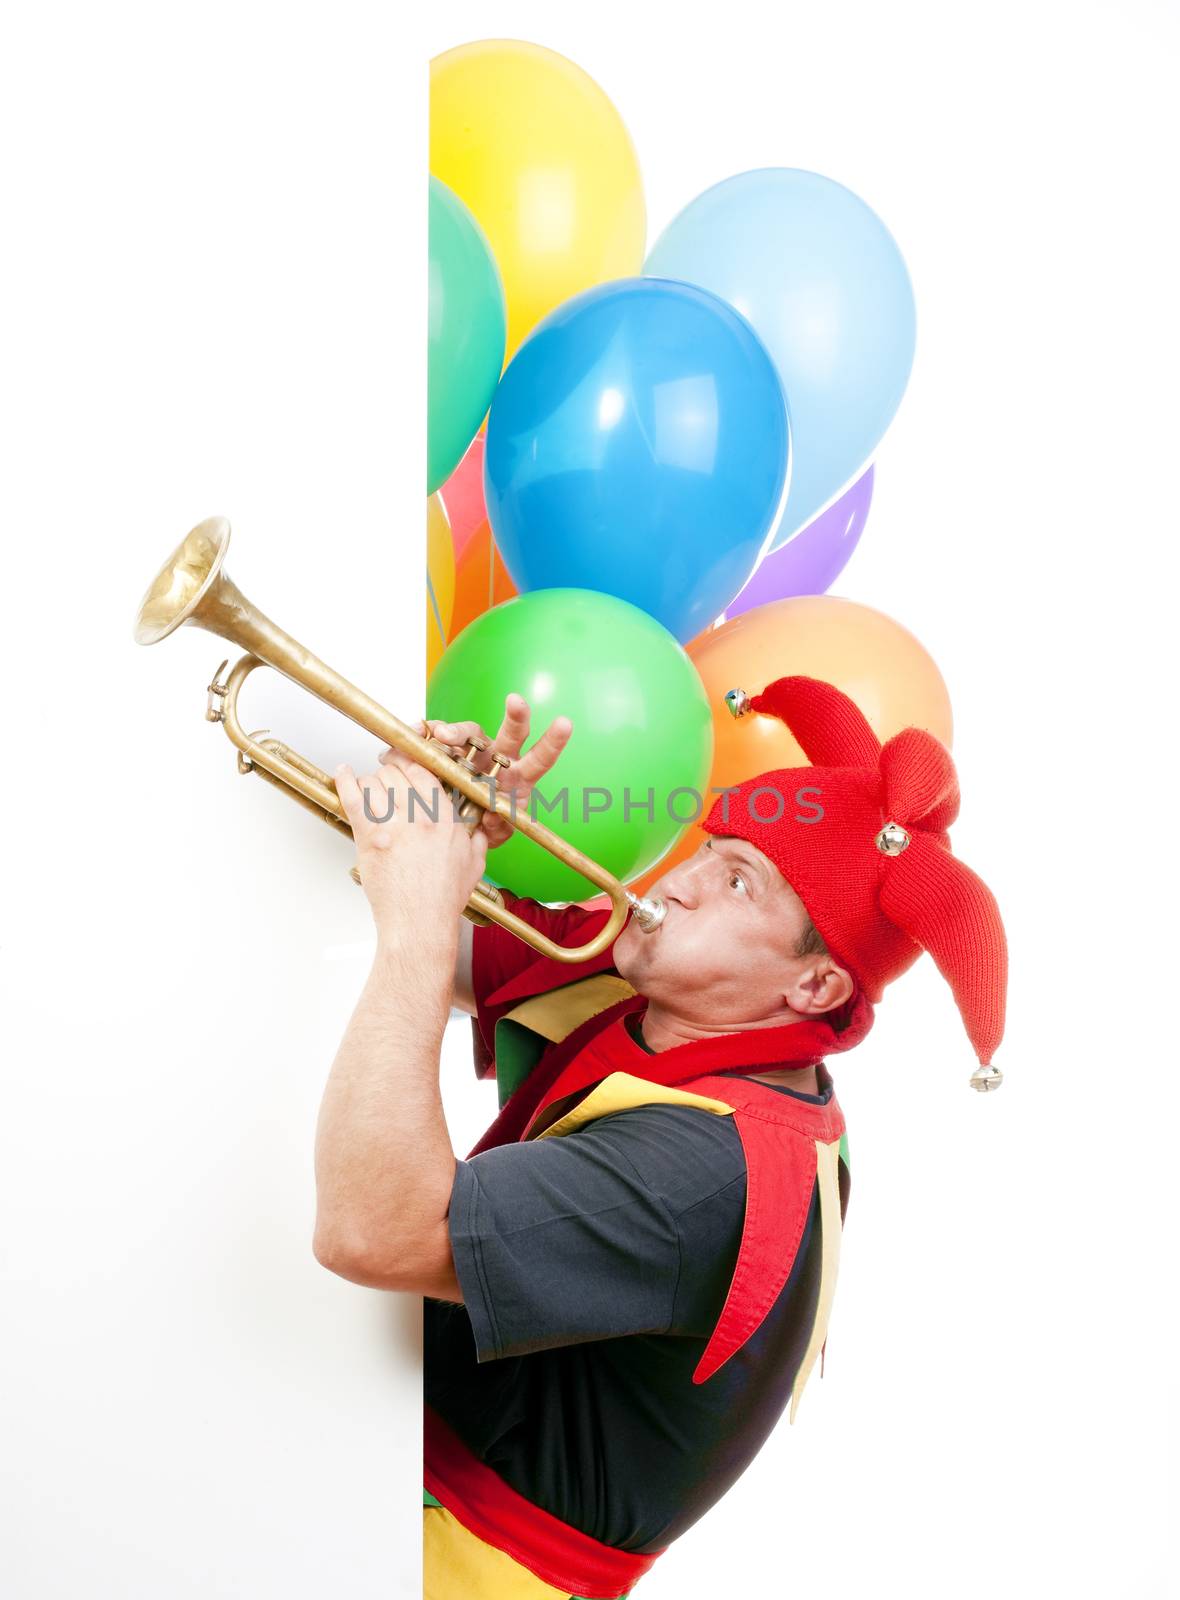 jester blowing trumpet by courtyardpix